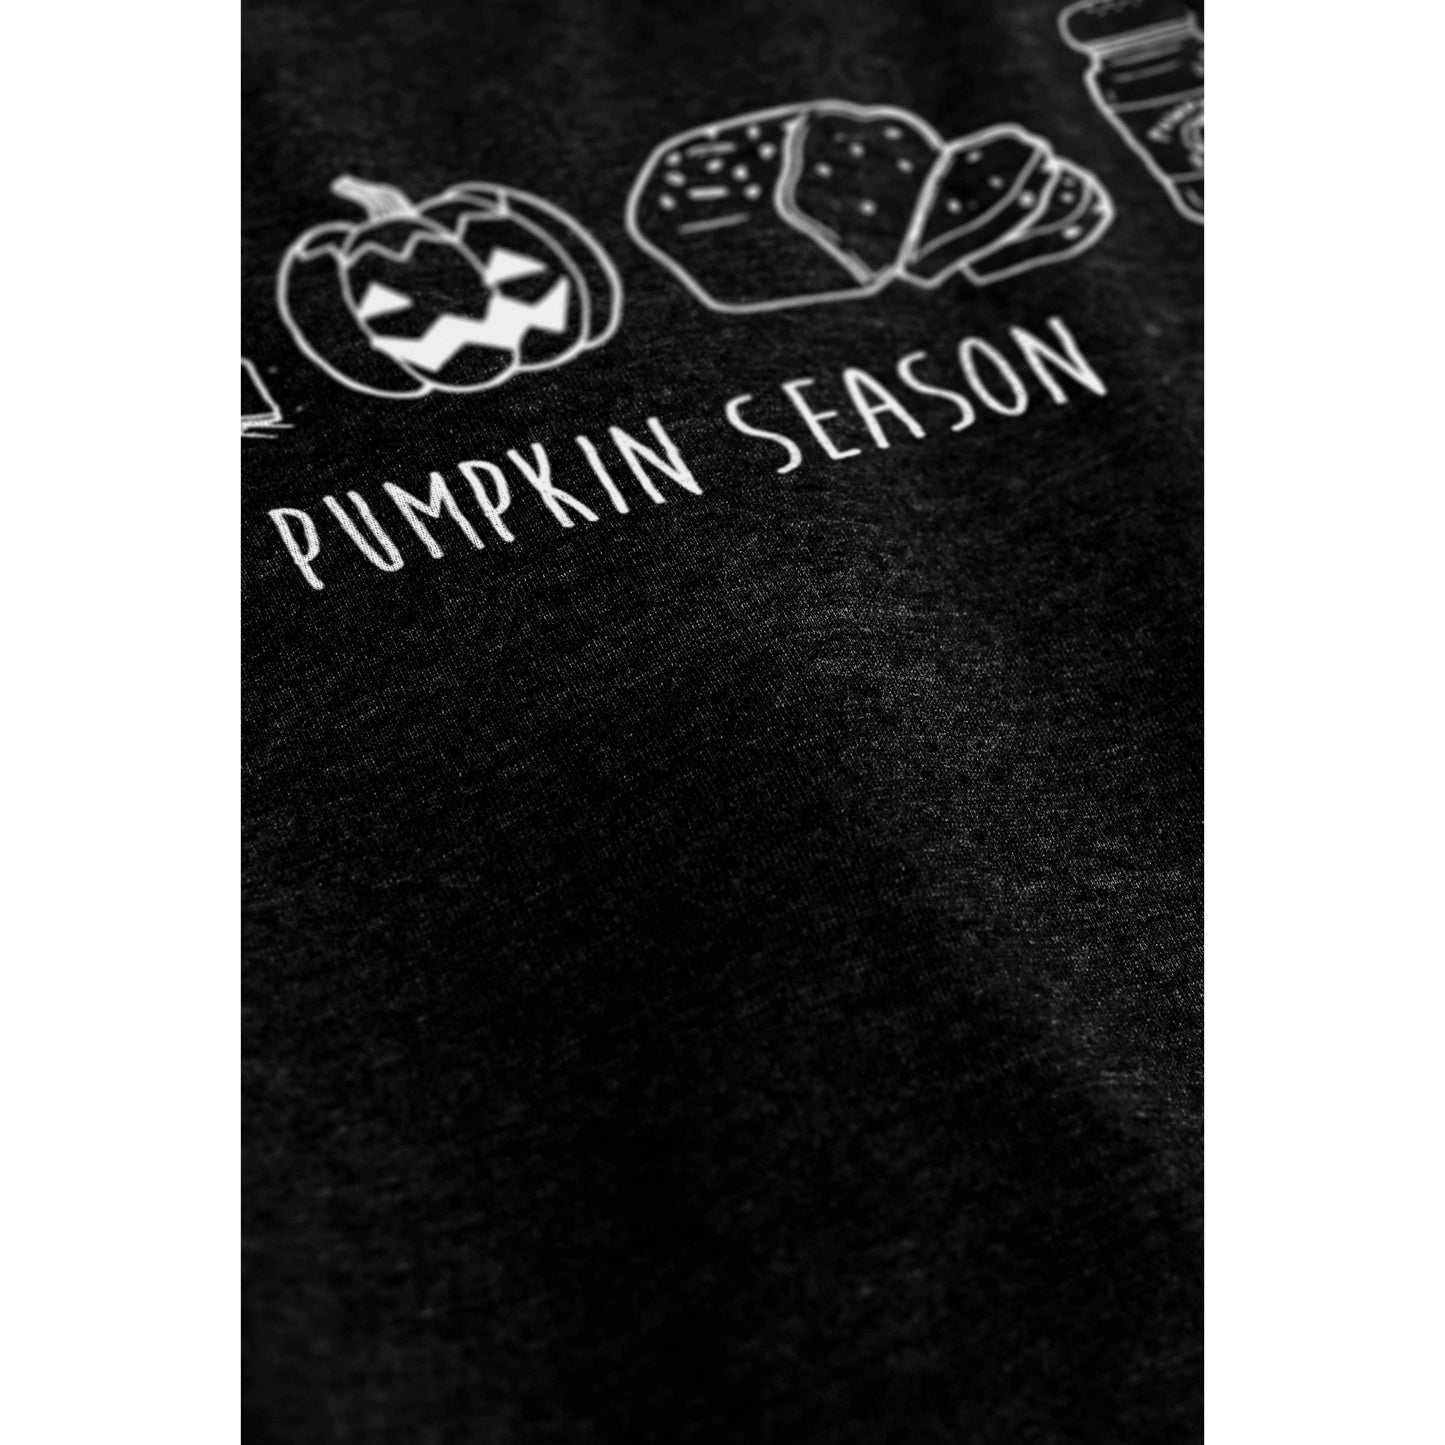 Pumpkin Season - thread tank | Stories you can wear.